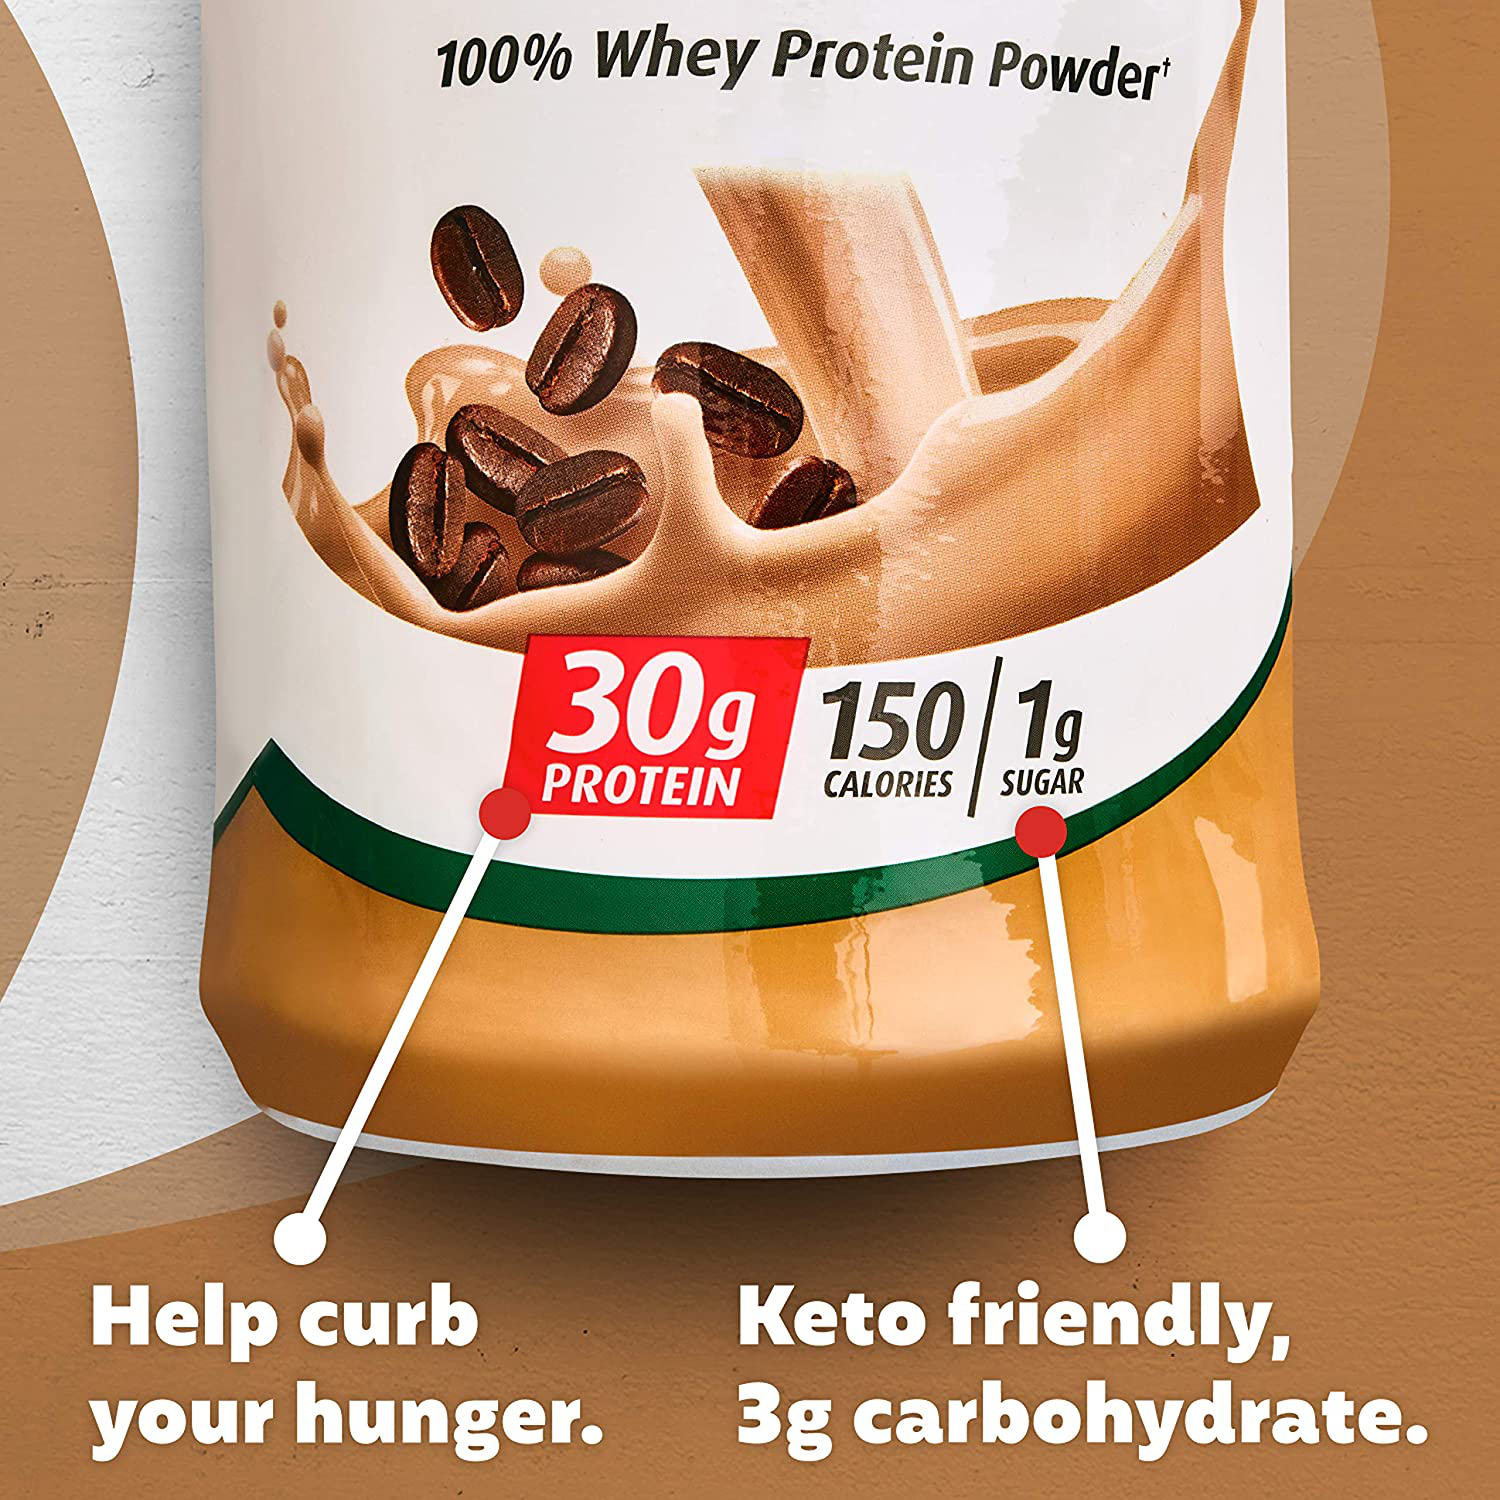 Premier Protein 100% Whey Protein Powder(Keto Friendly, No Soy Ingredients, Gluten Free), 23.9 Oz